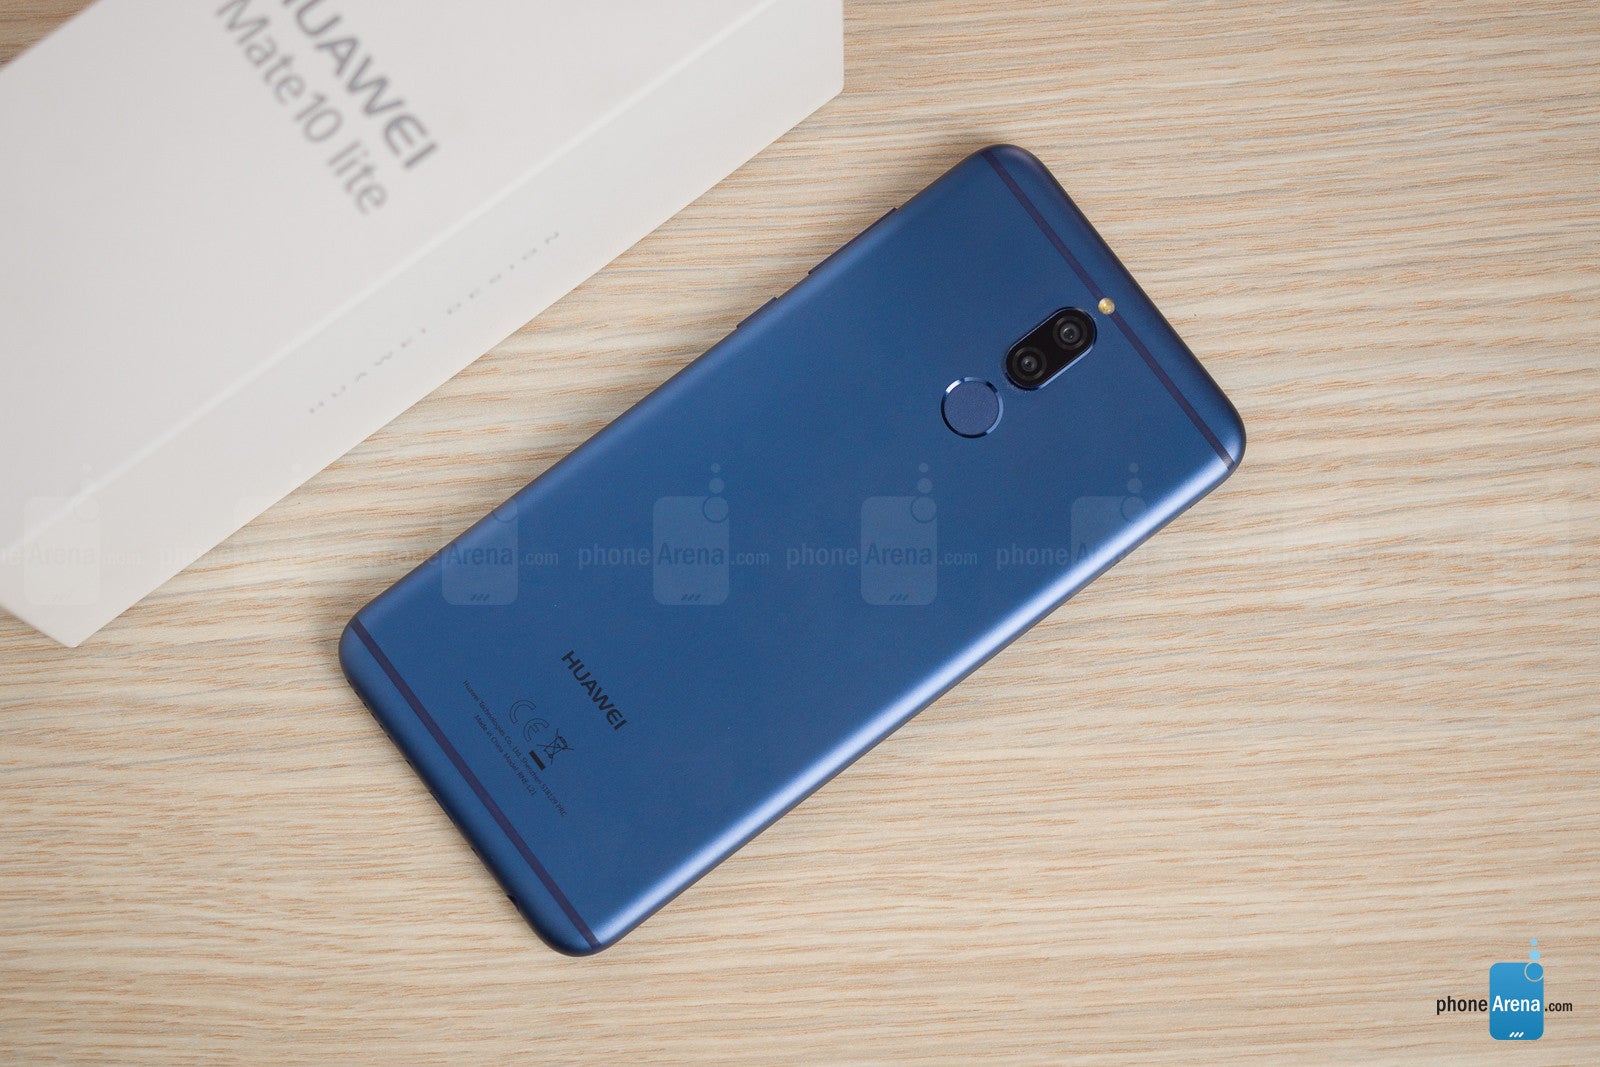 Huawei Mate 10 Lite Review